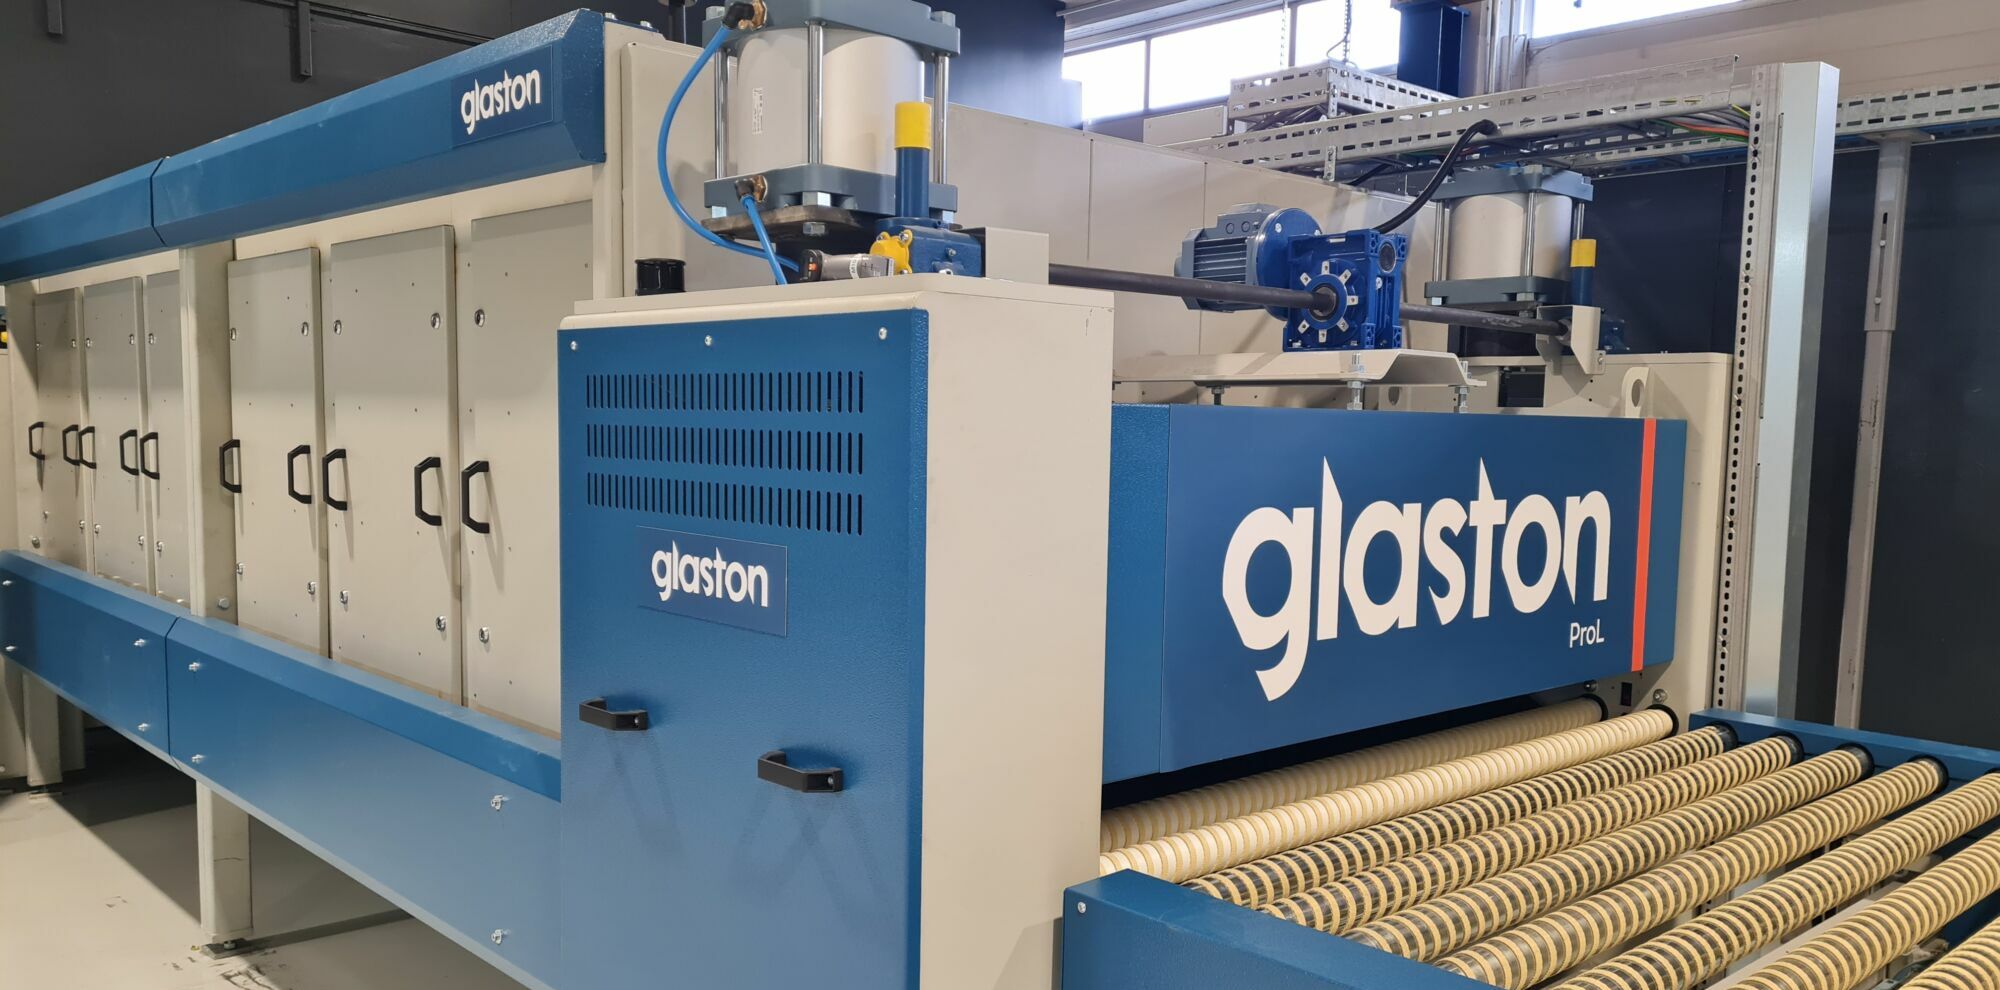 Glaston ProL flat glass laminating line